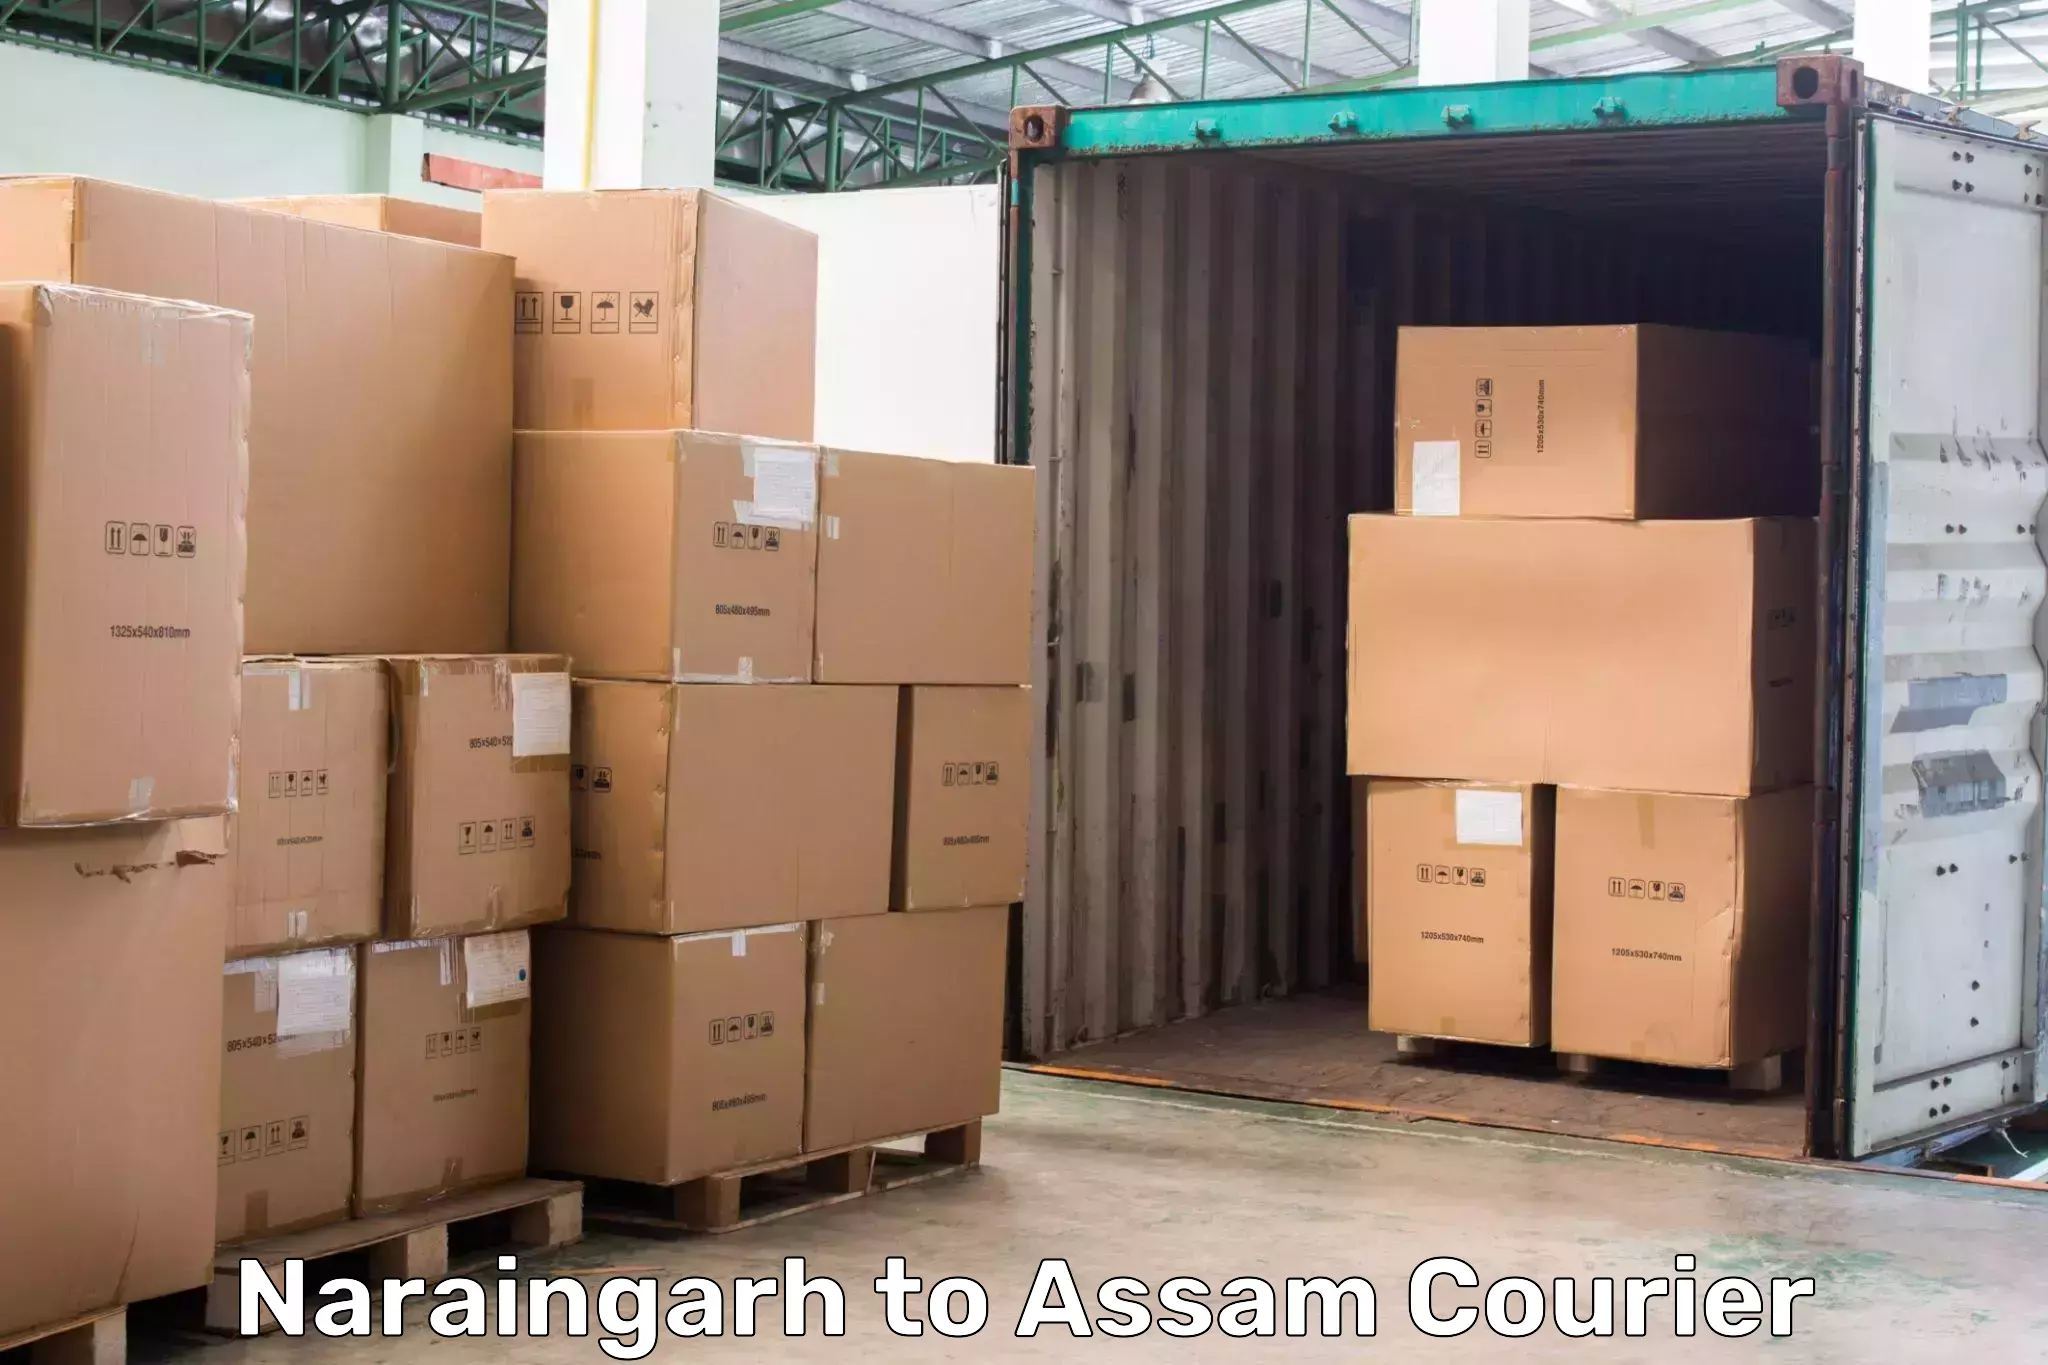 Enhanced tracking features Naraingarh to Mariani